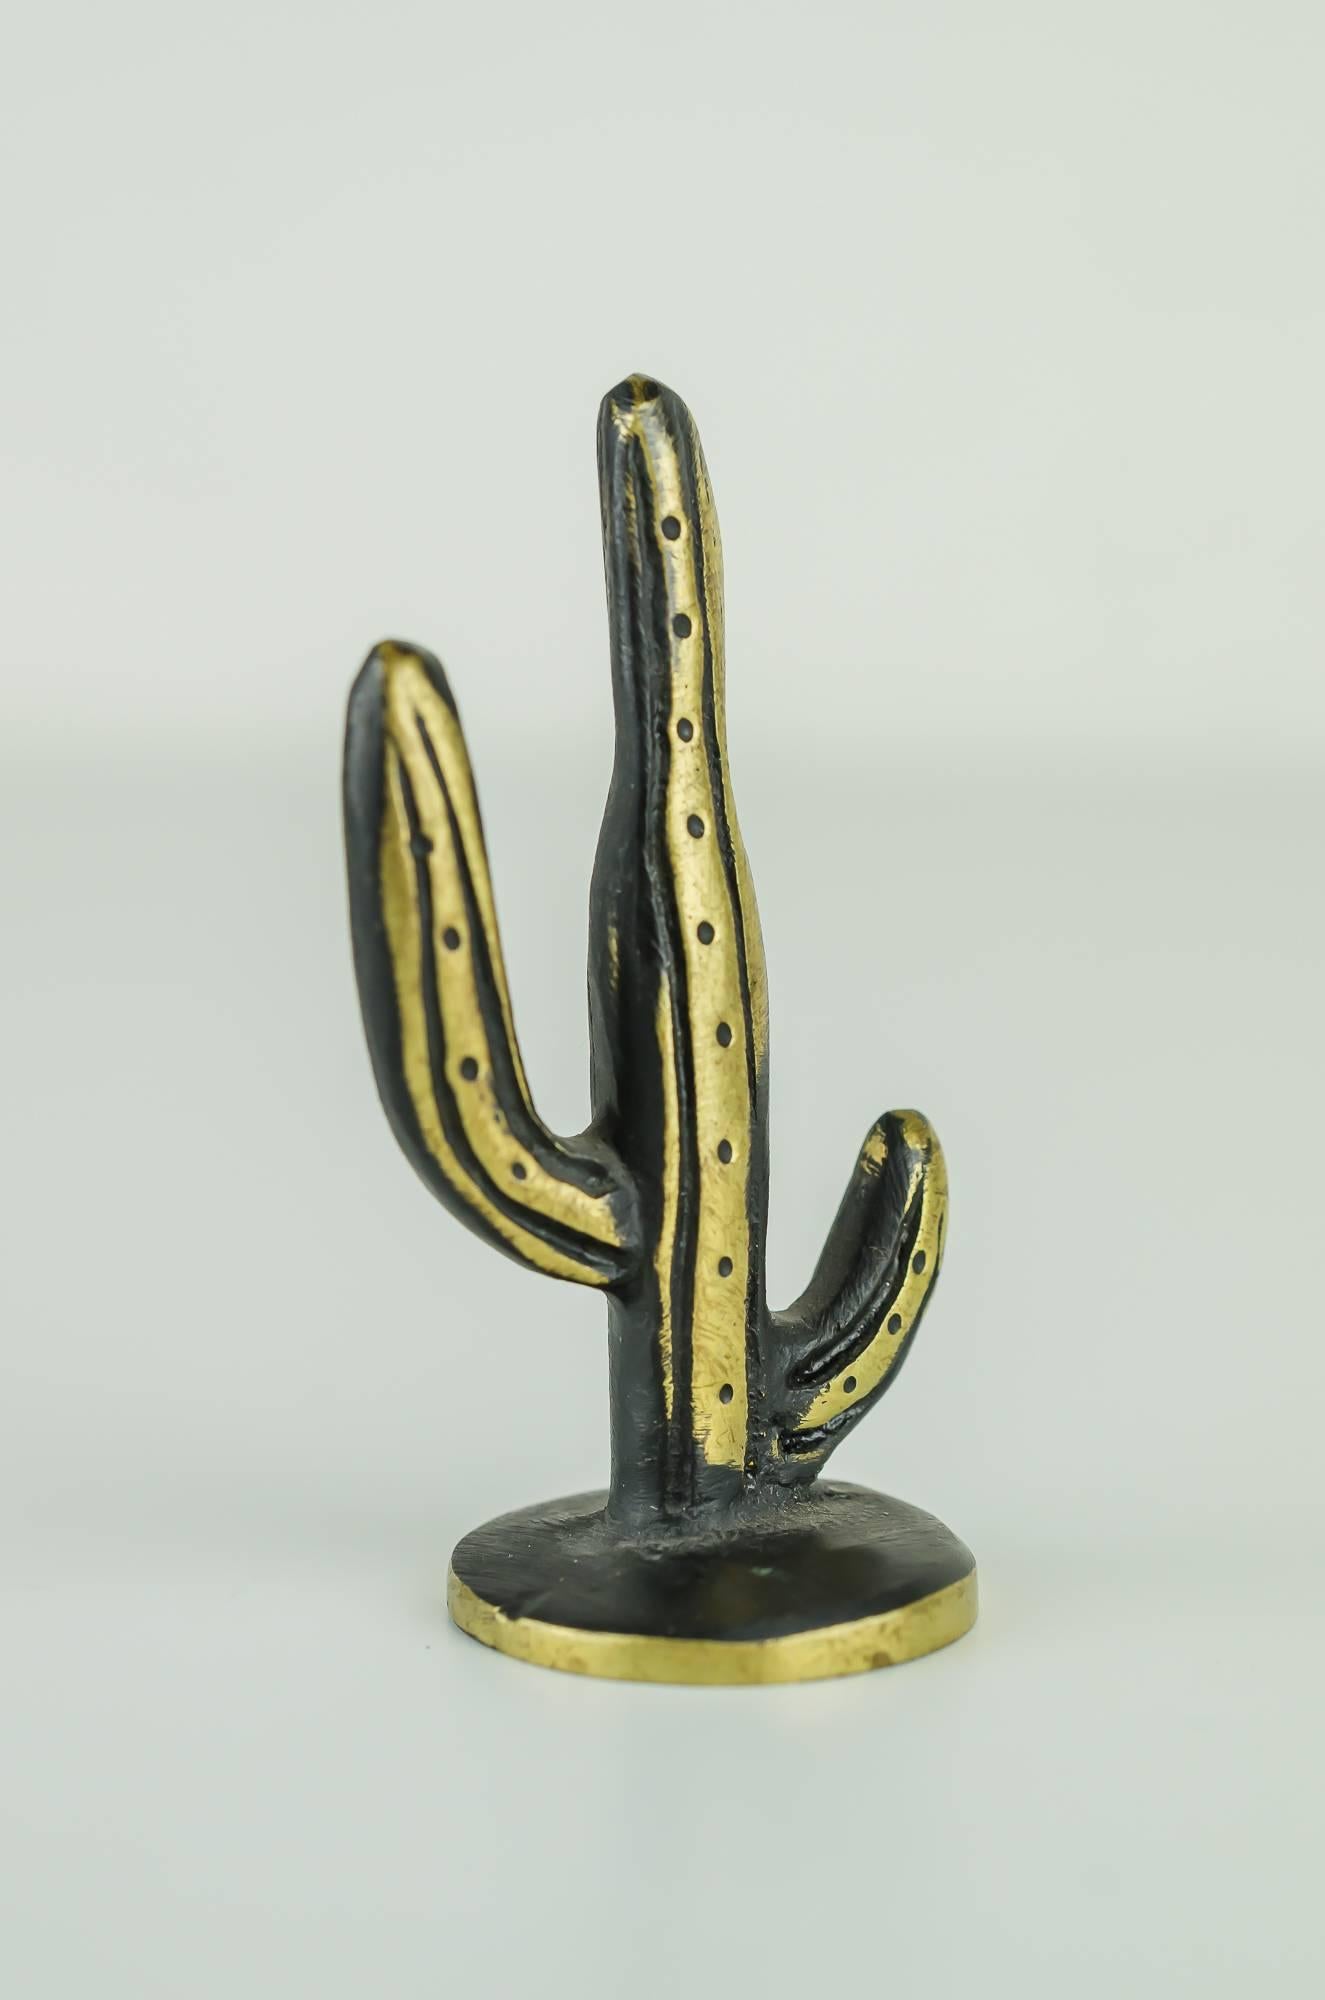 Walter Bosse cactus, circa 1950s
Original condition.